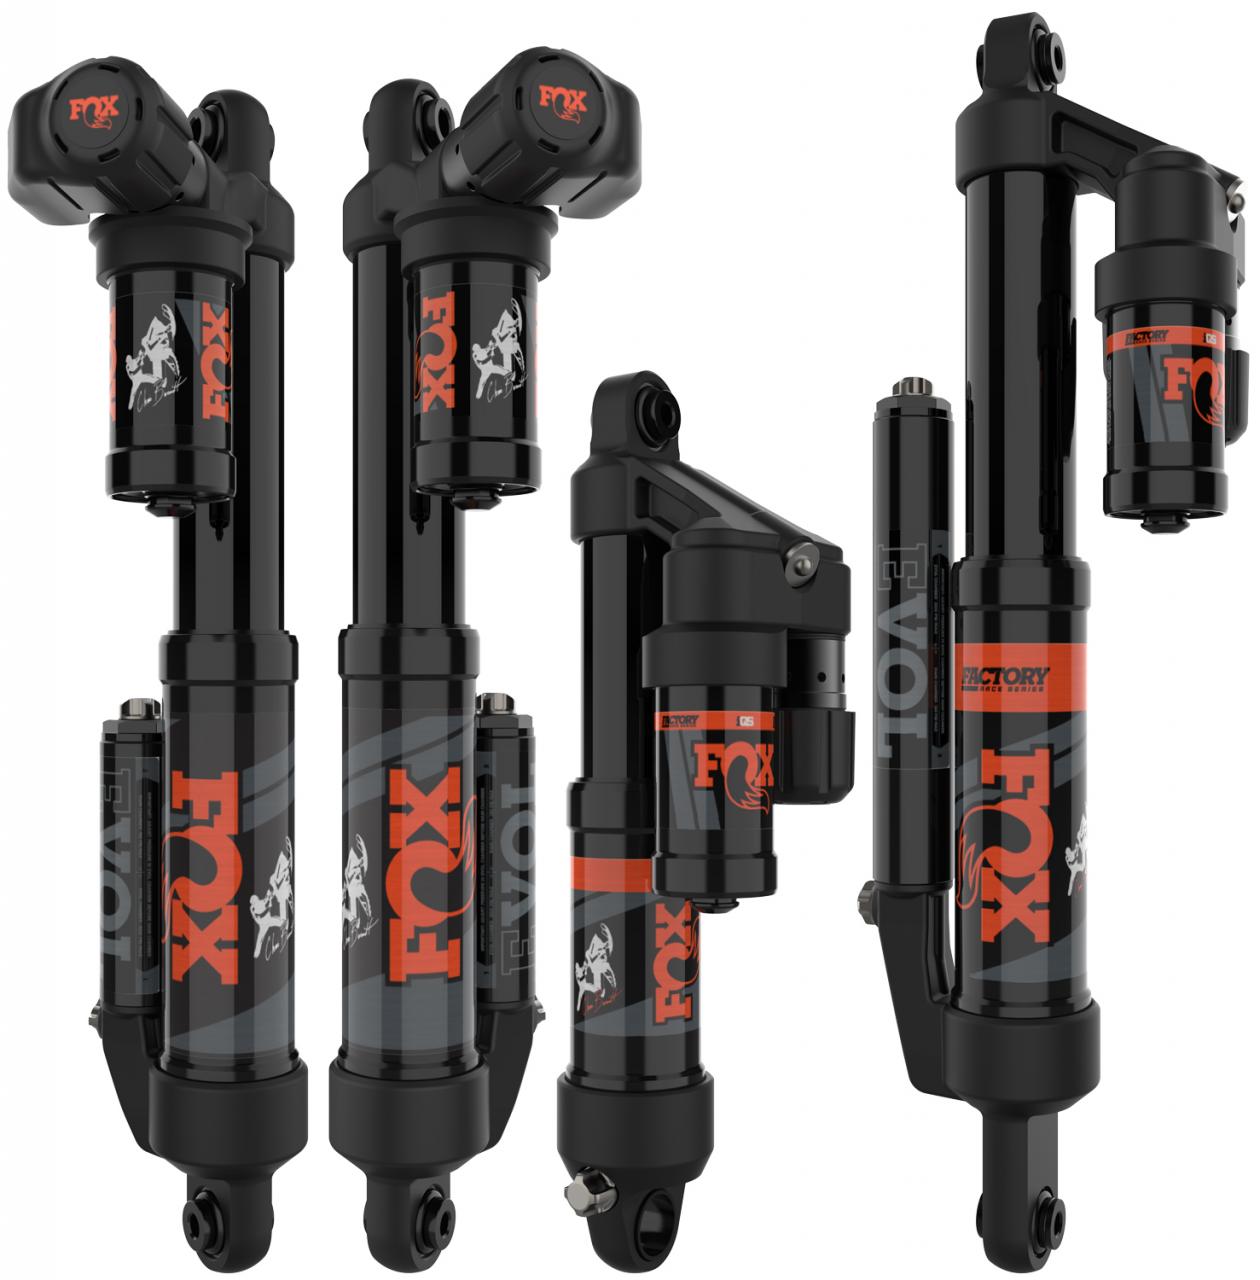 FOX iQS for Matryx RMK - IQS Float 3 Evol QS3 Burandt Edition LIGHTWEIGHT